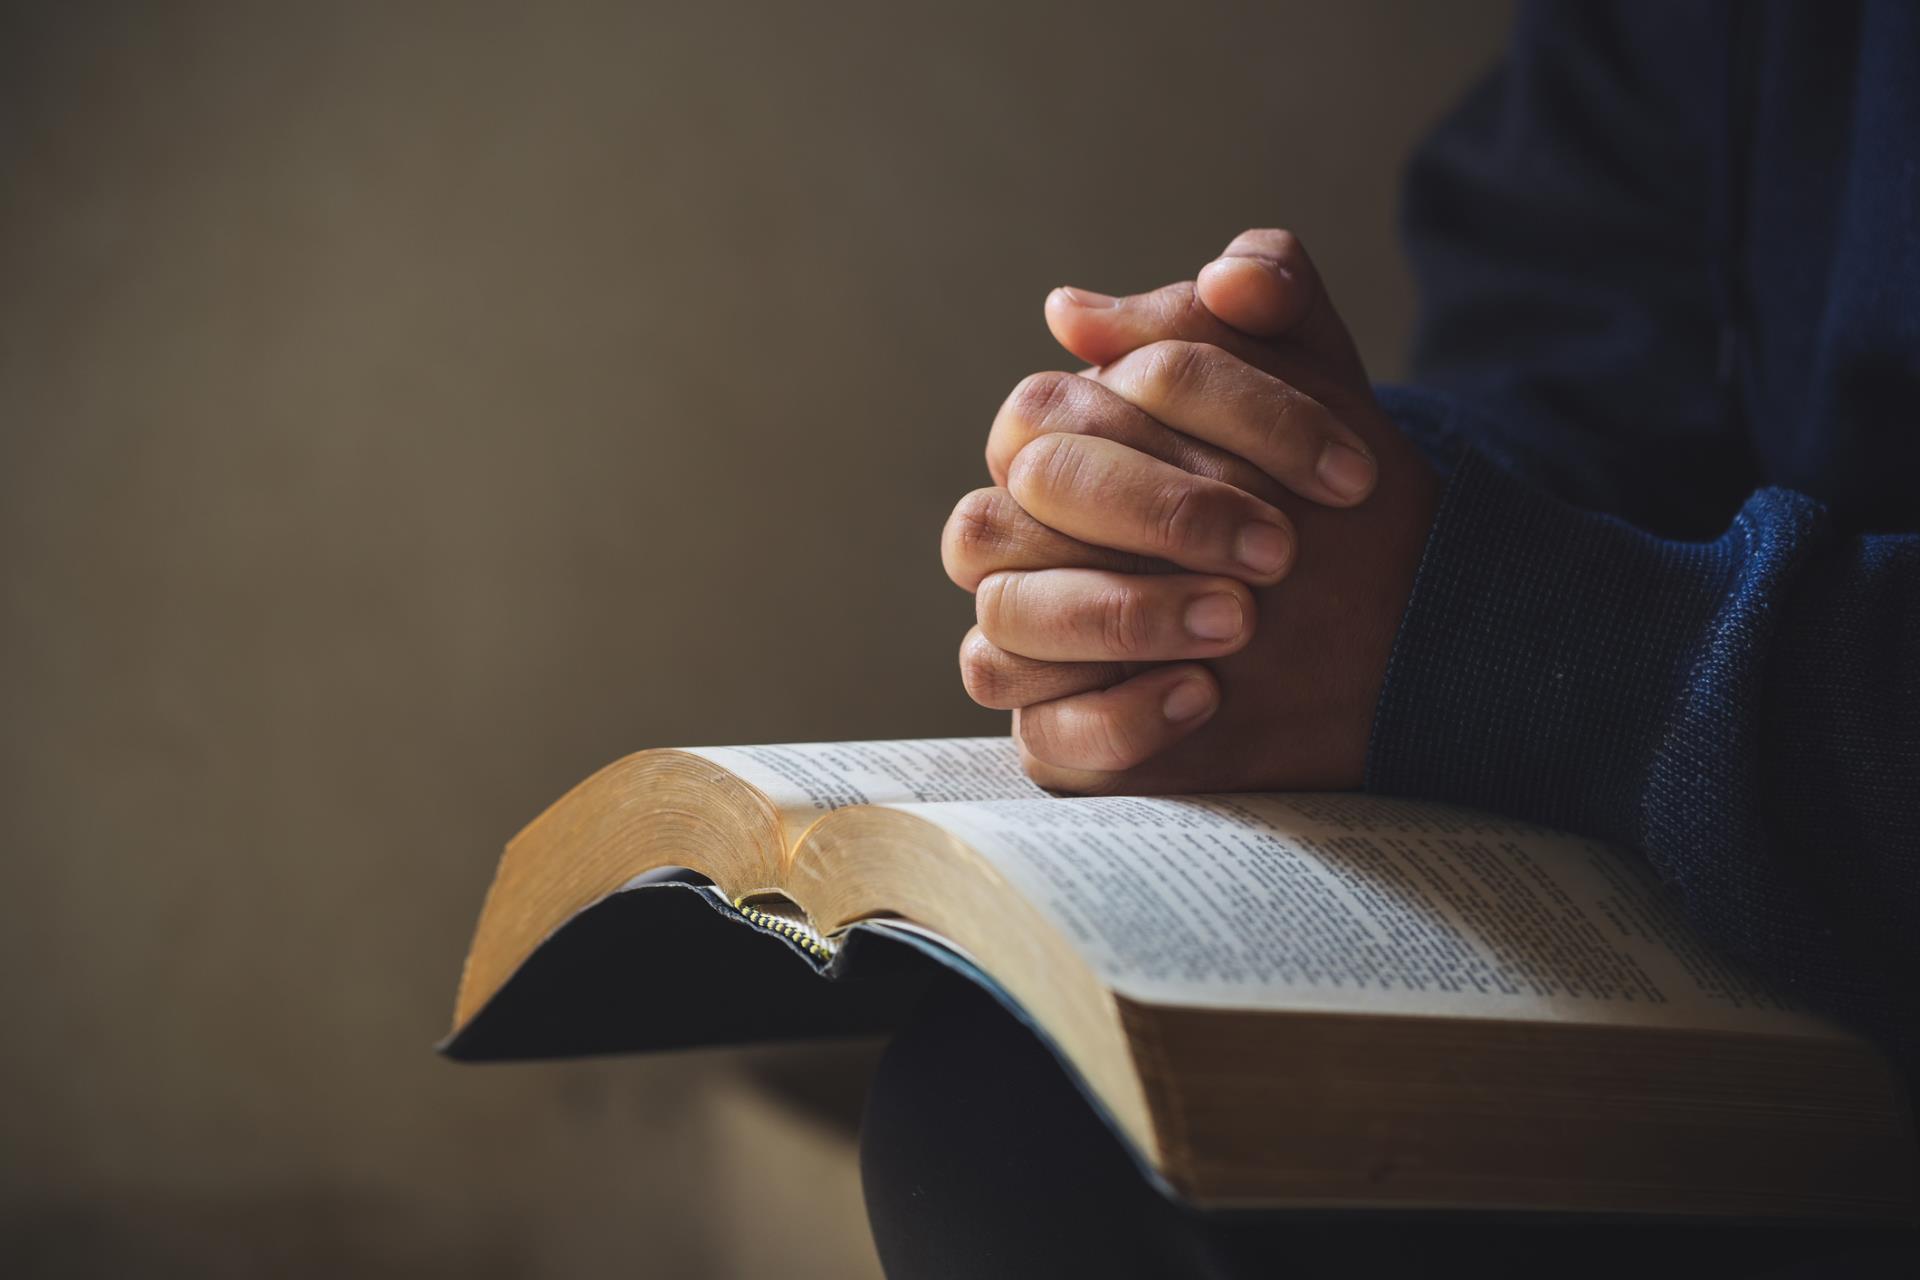 prayer and bible